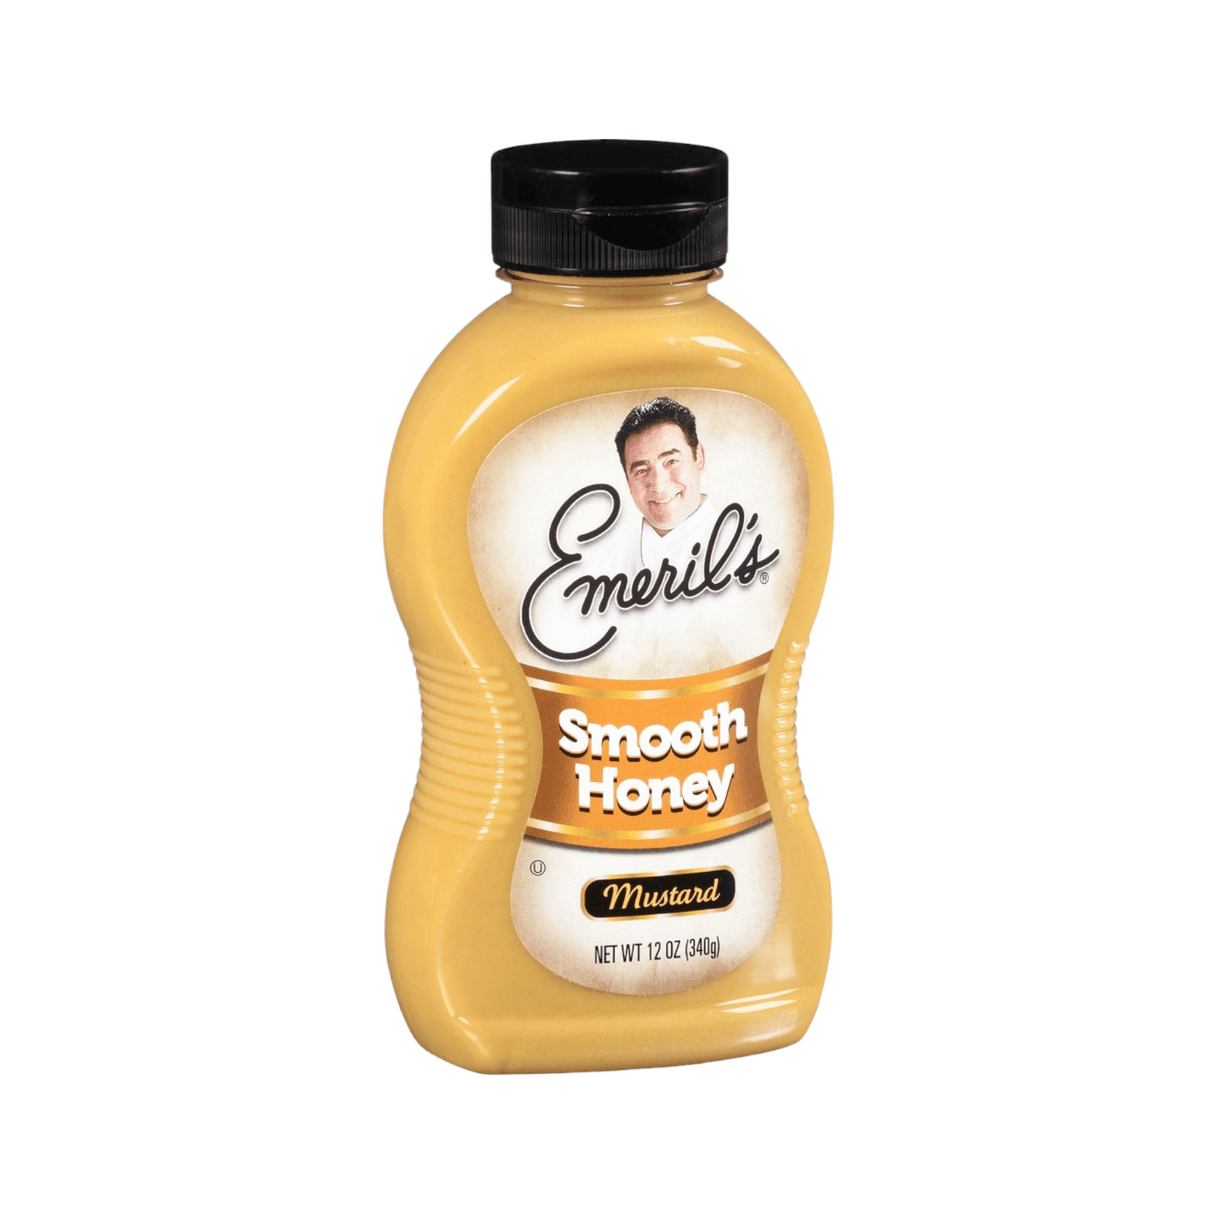 Emeril’s Smooth Honey Mustard